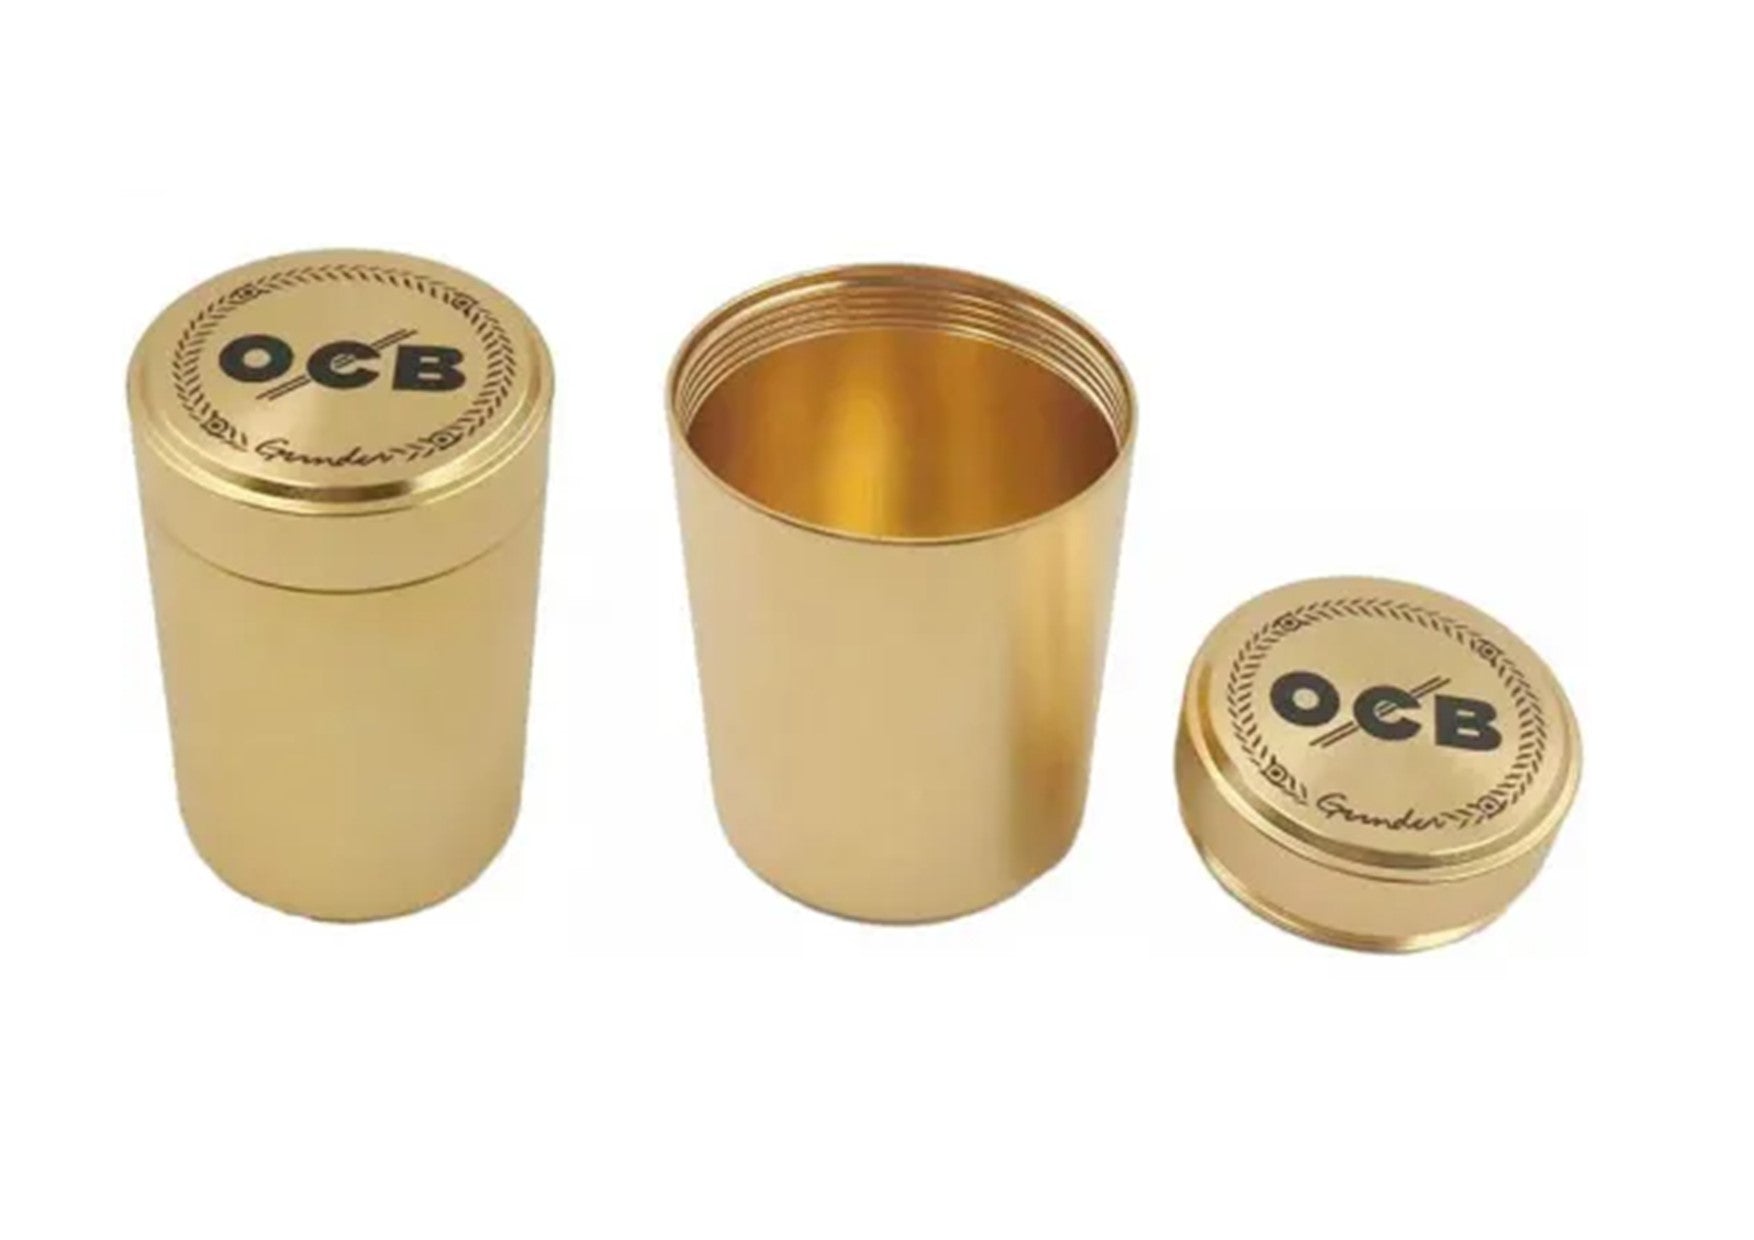 OCB | Gold Storage Container